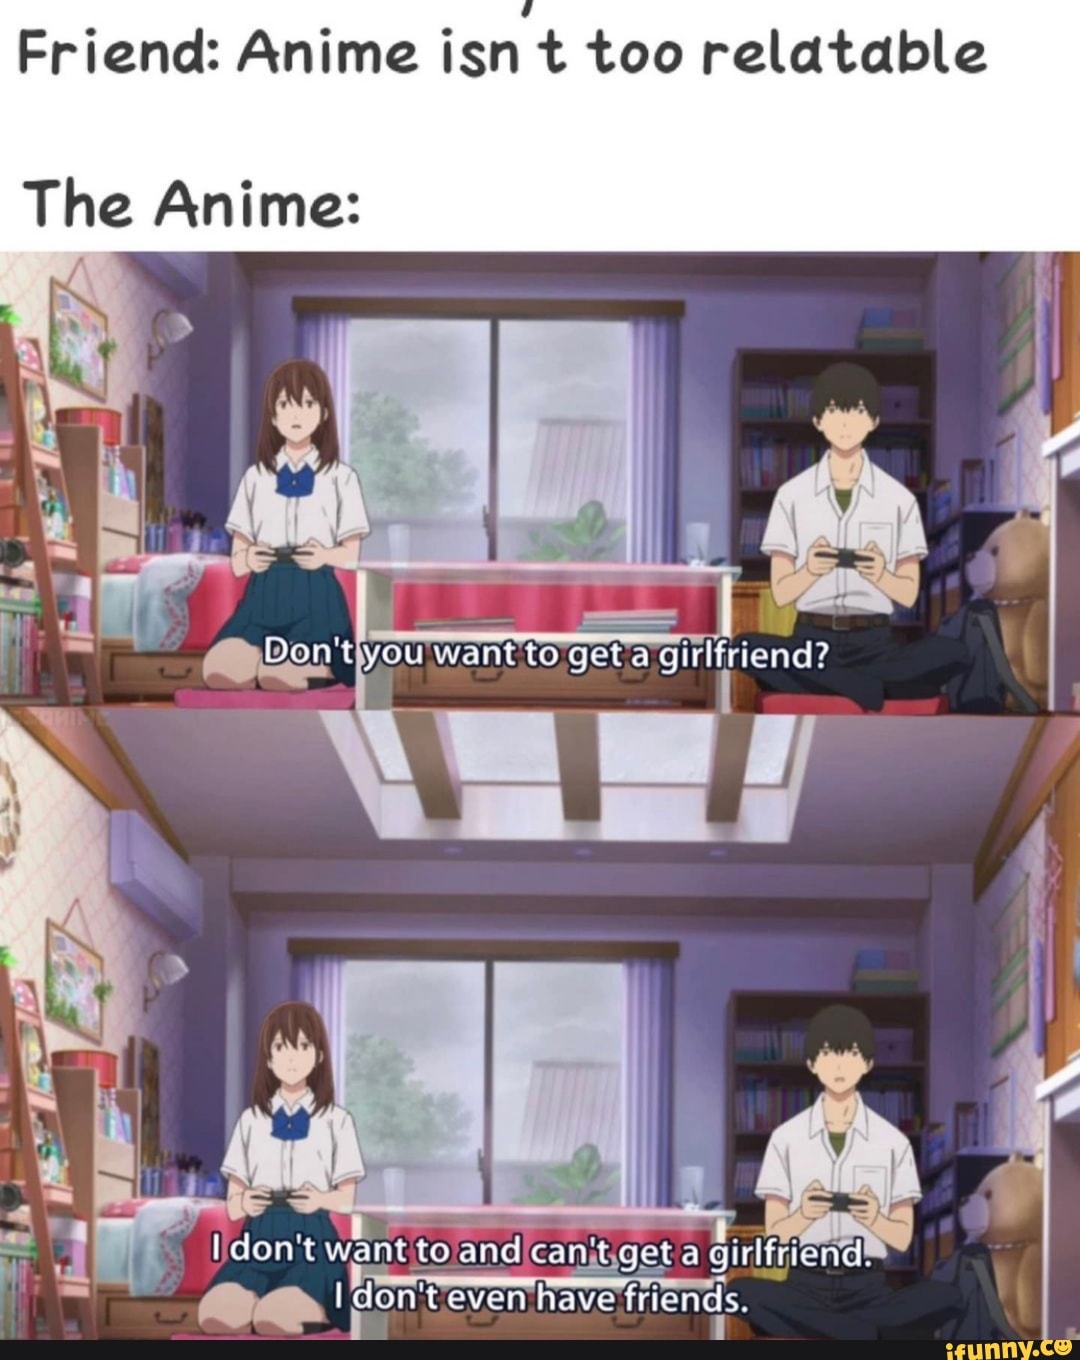 Relatable childhood anime meme